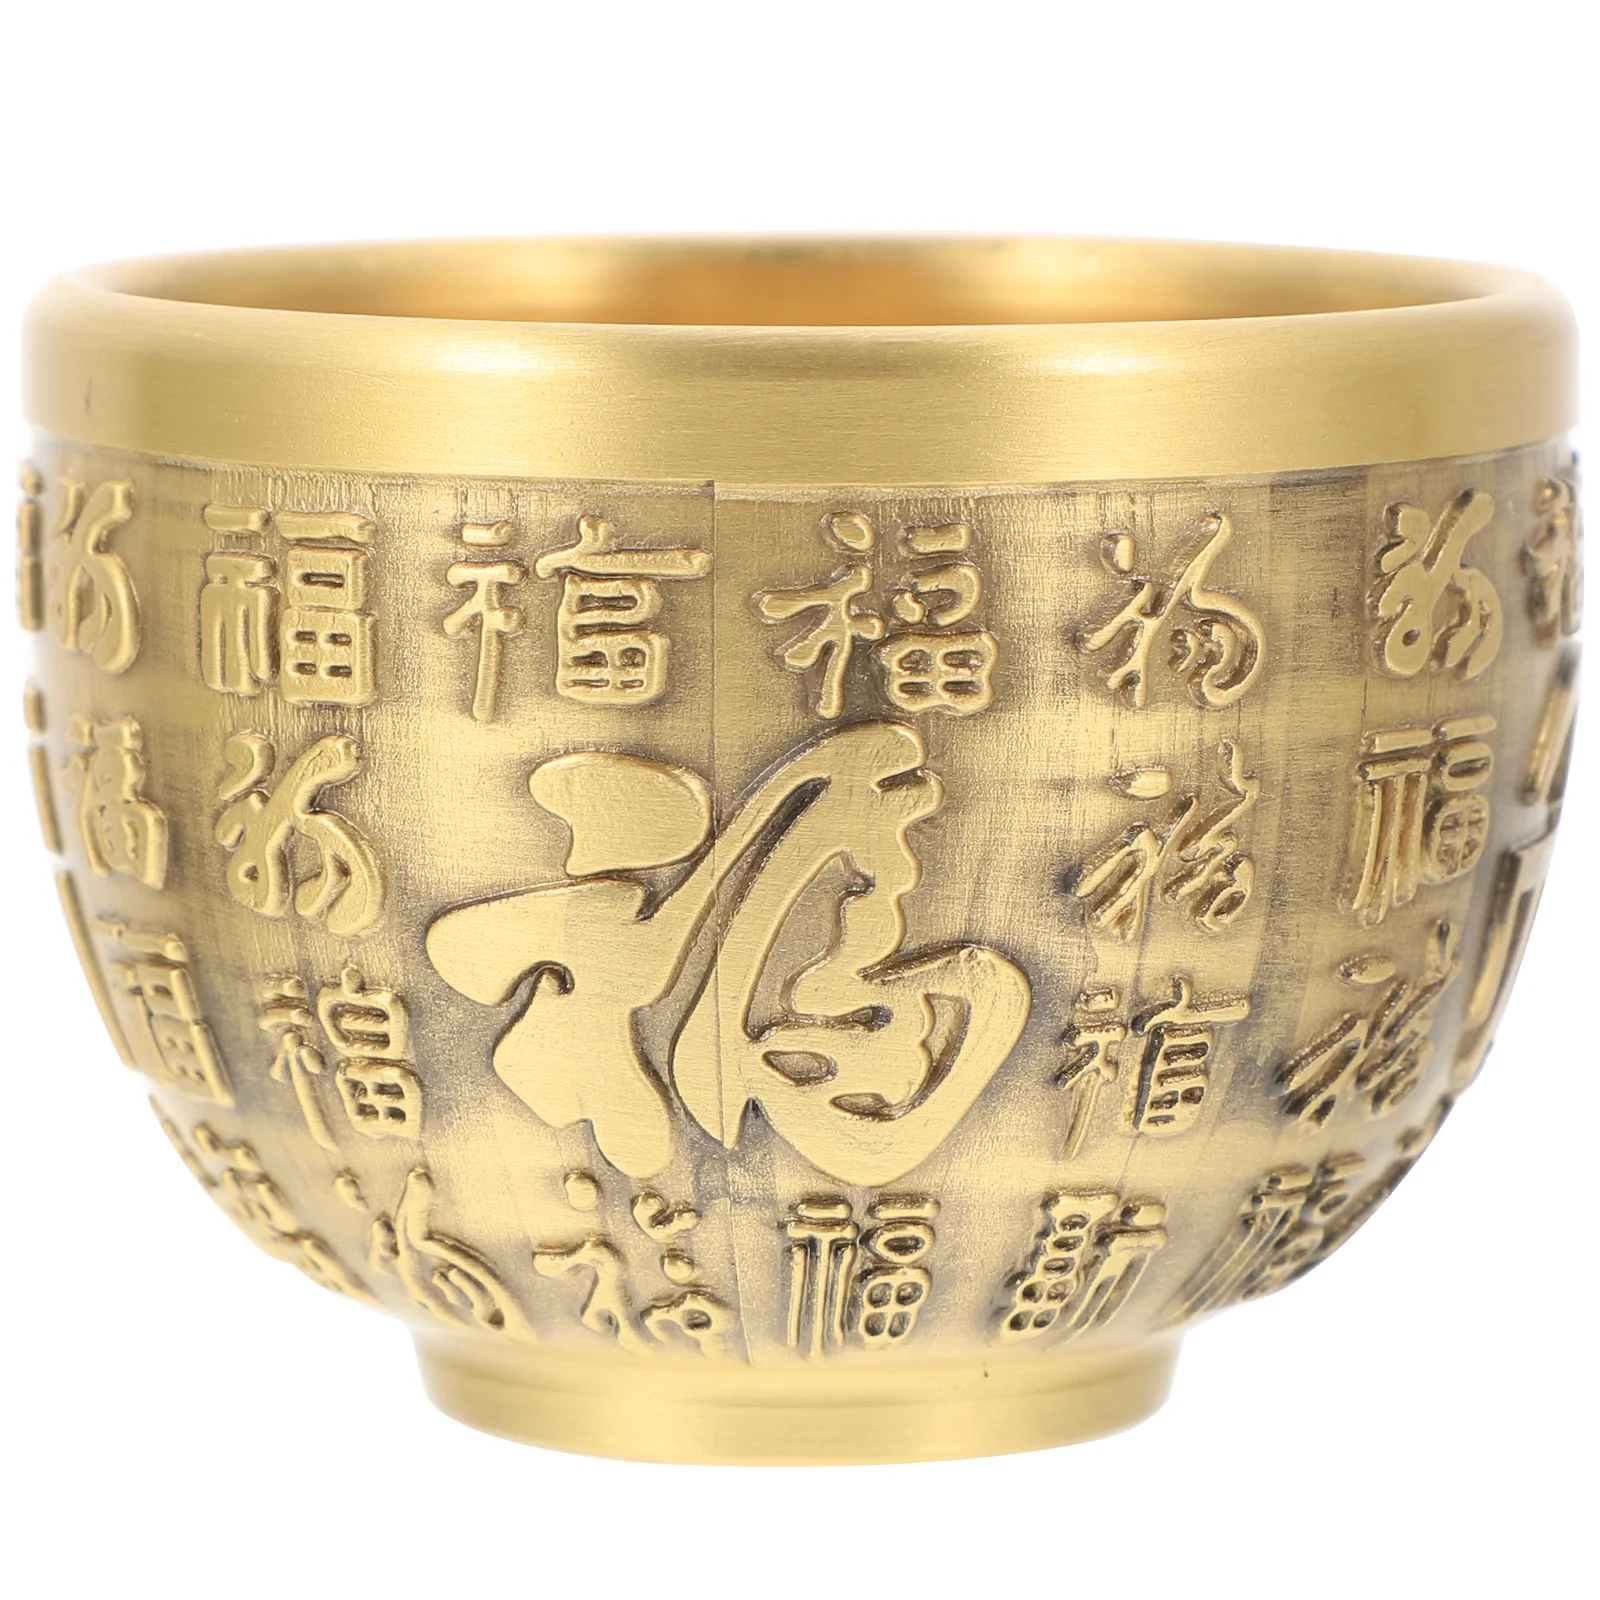 

Bowl Offering Treasure Brass Bowls Altar Basin Chinese Tibetan Copper Money Meditation Fortune Temple Wealth Fu Decor Basi Pagan